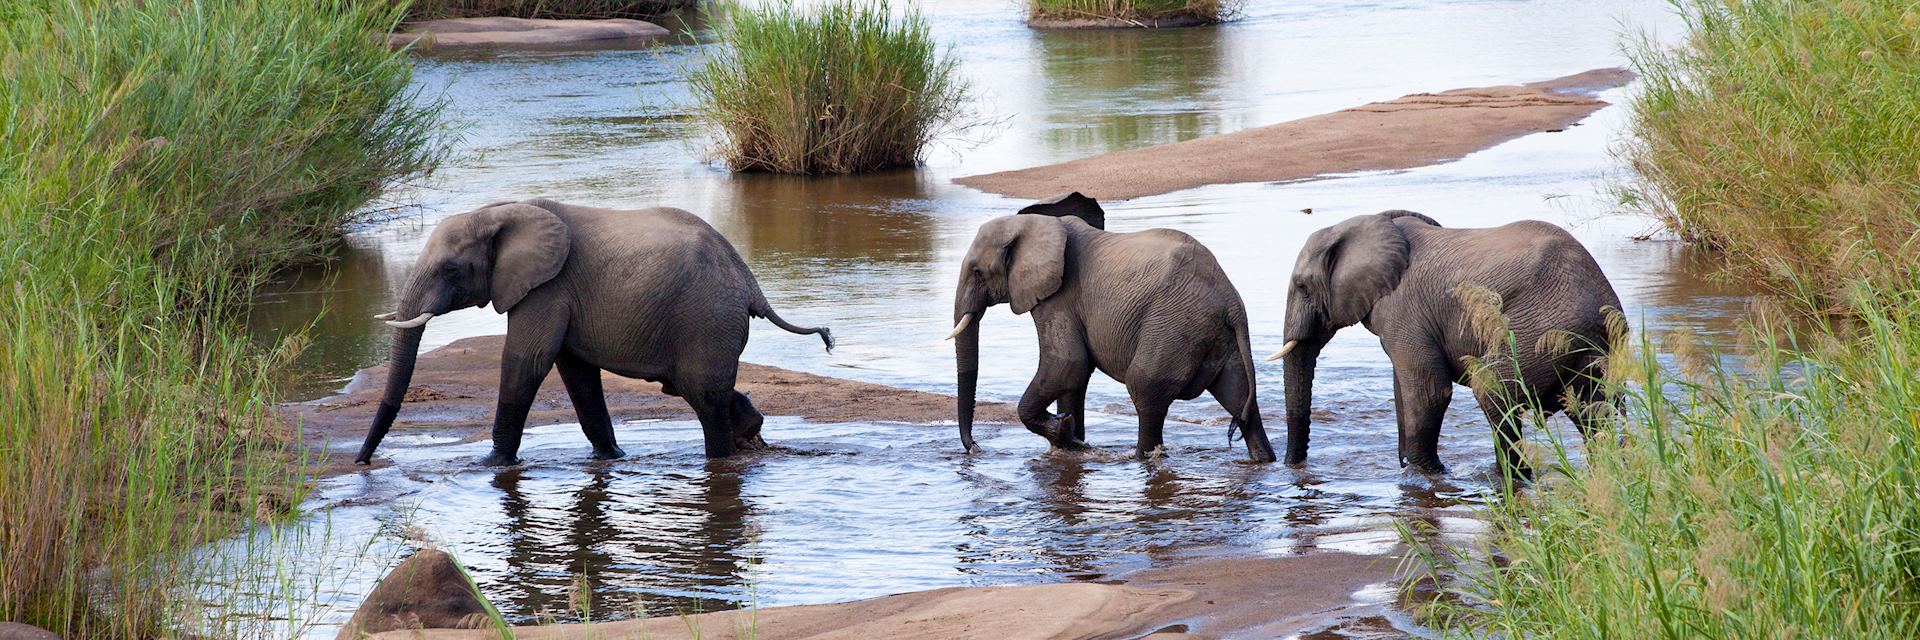 Elephant crossing a river, Kenya